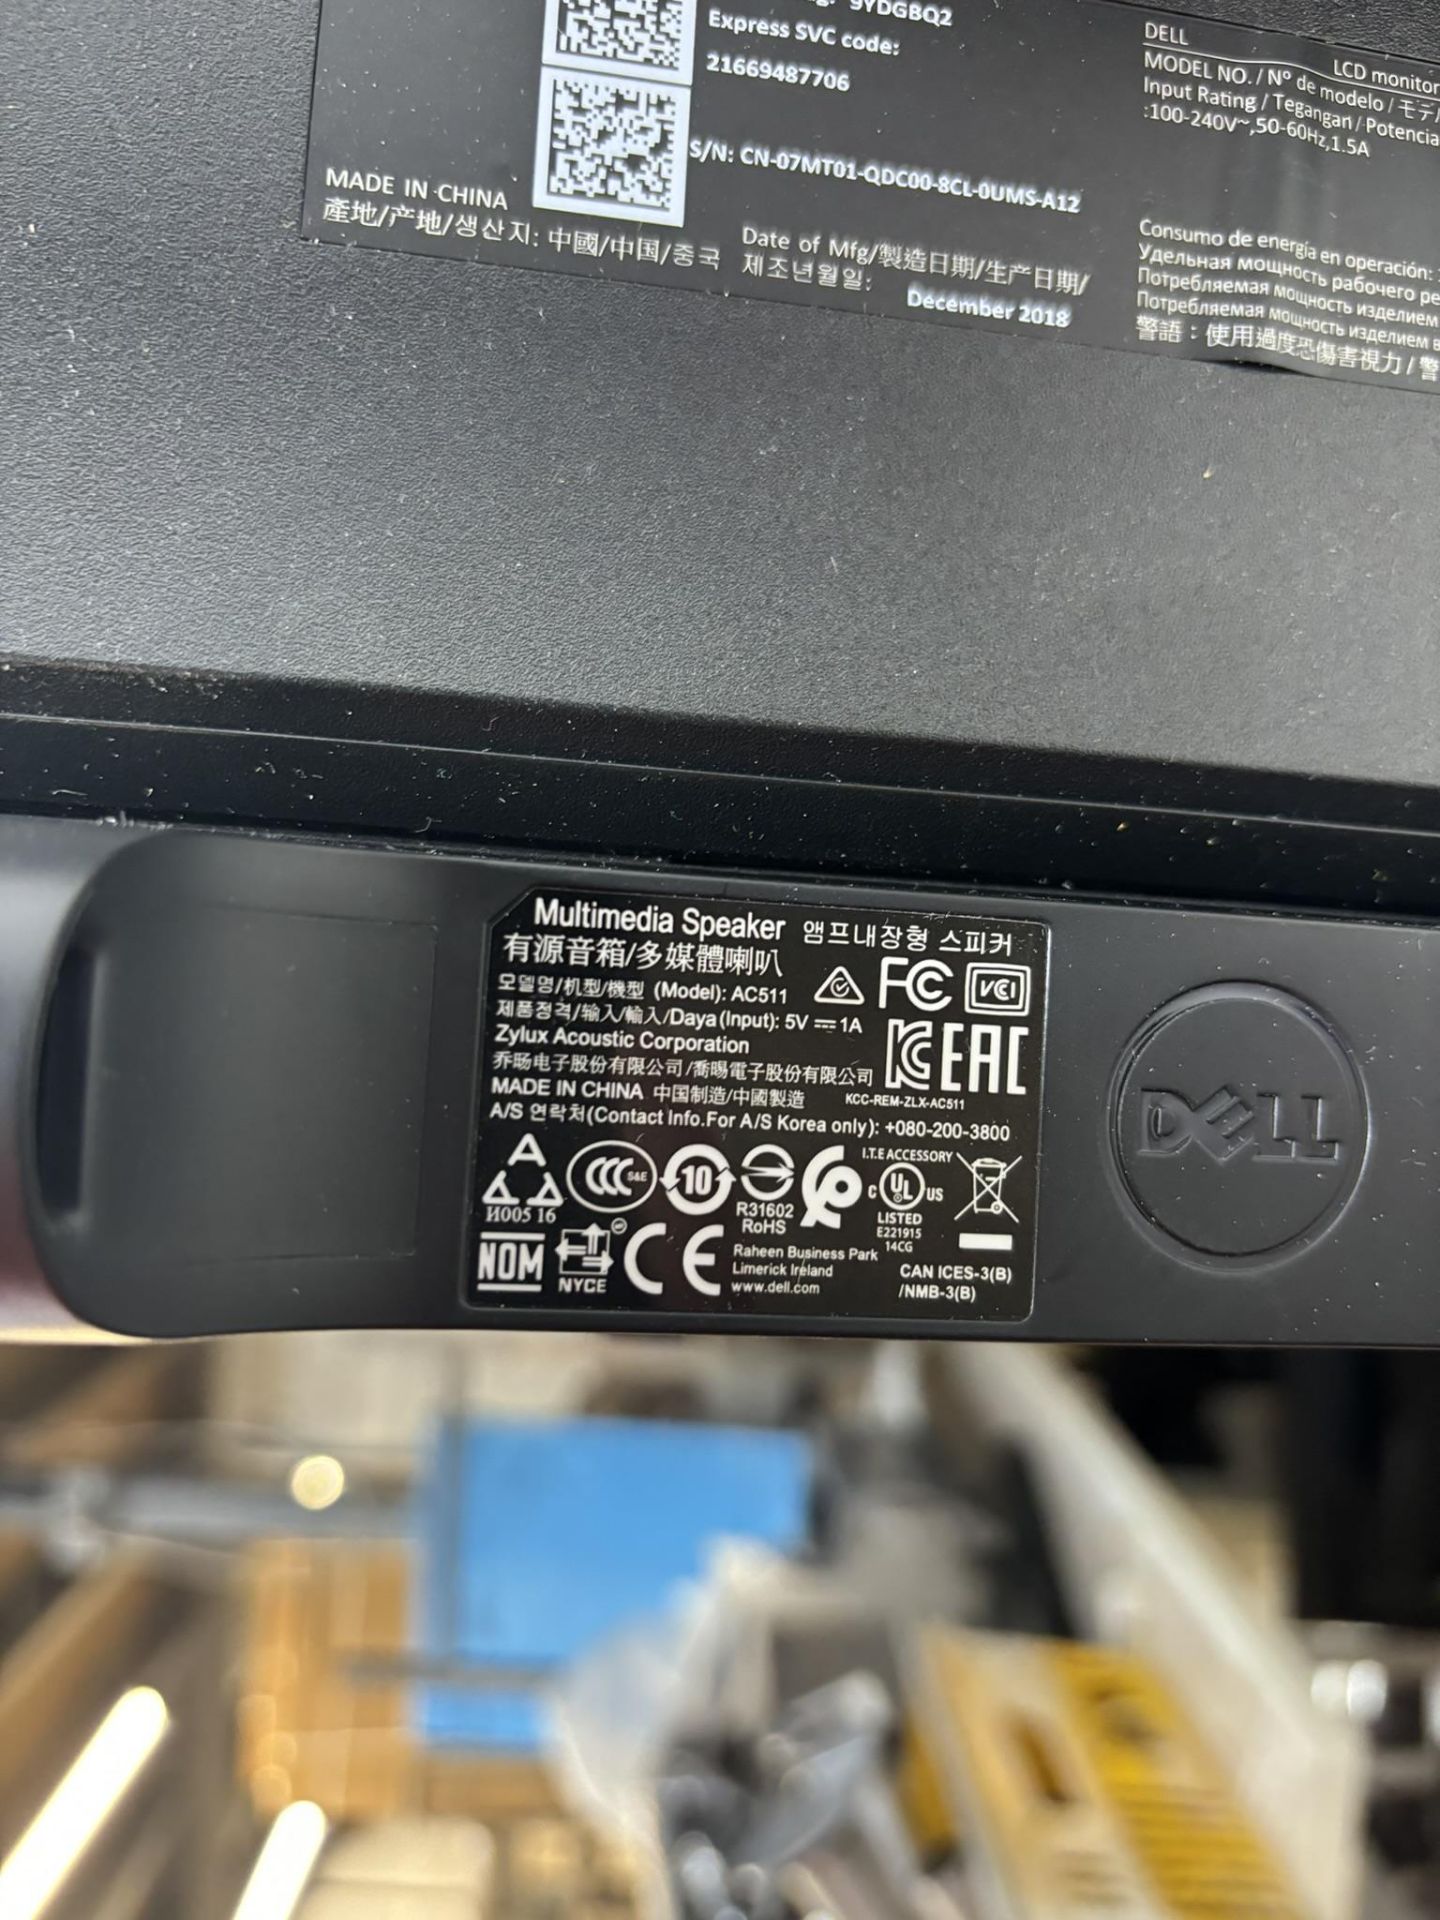 6 x Dell U2415B 24? Height Adjustable Monitors With Dell AC511 soundbar - Image 5 of 5